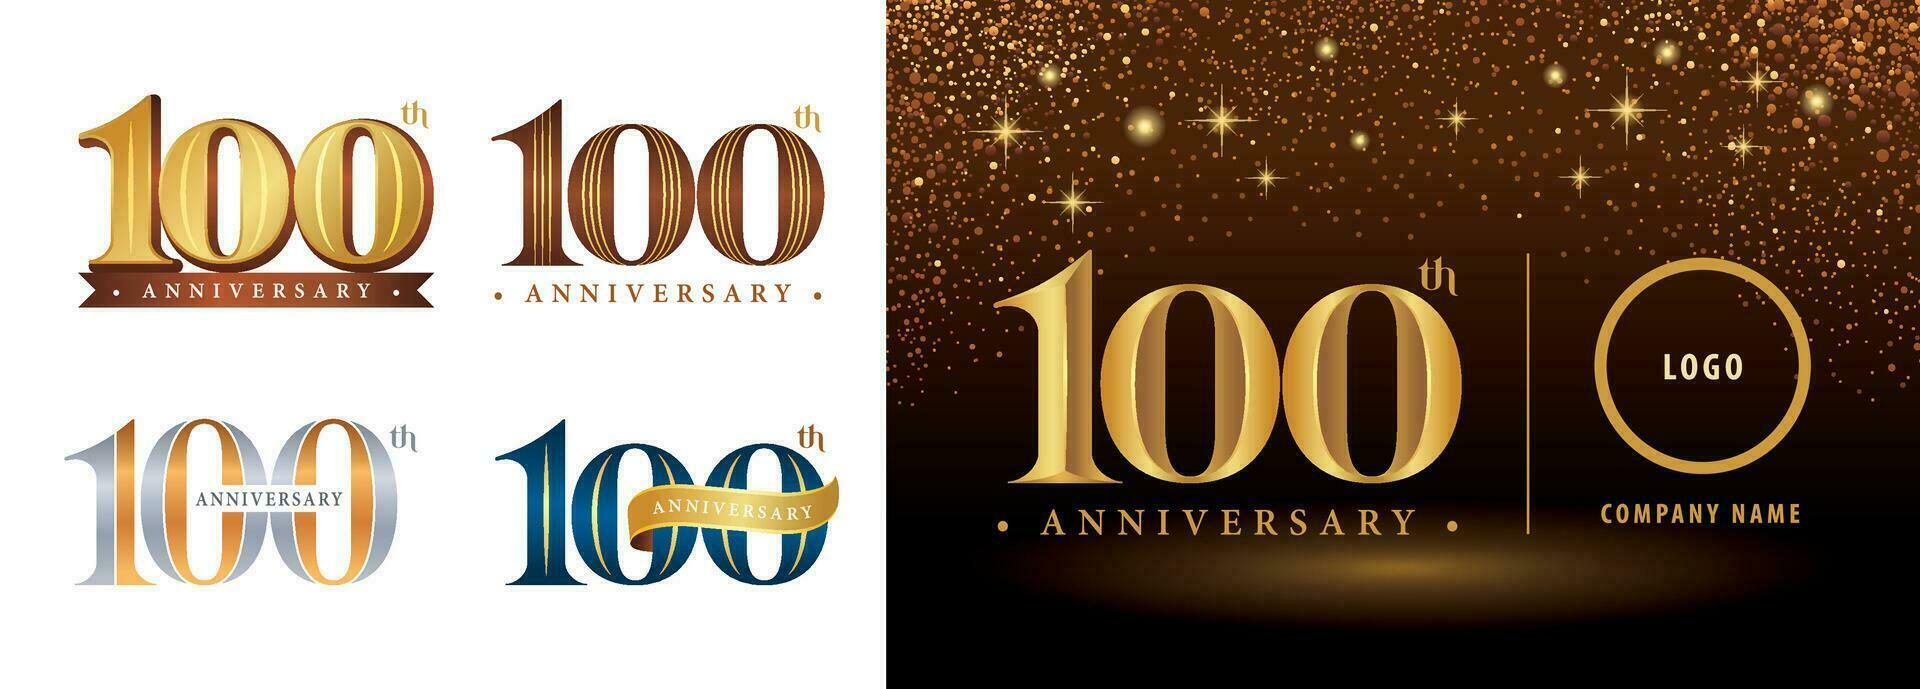 conjunto do 100ª aniversário logótipo projeto, cem anos a comemorar aniversário logotipo vetor